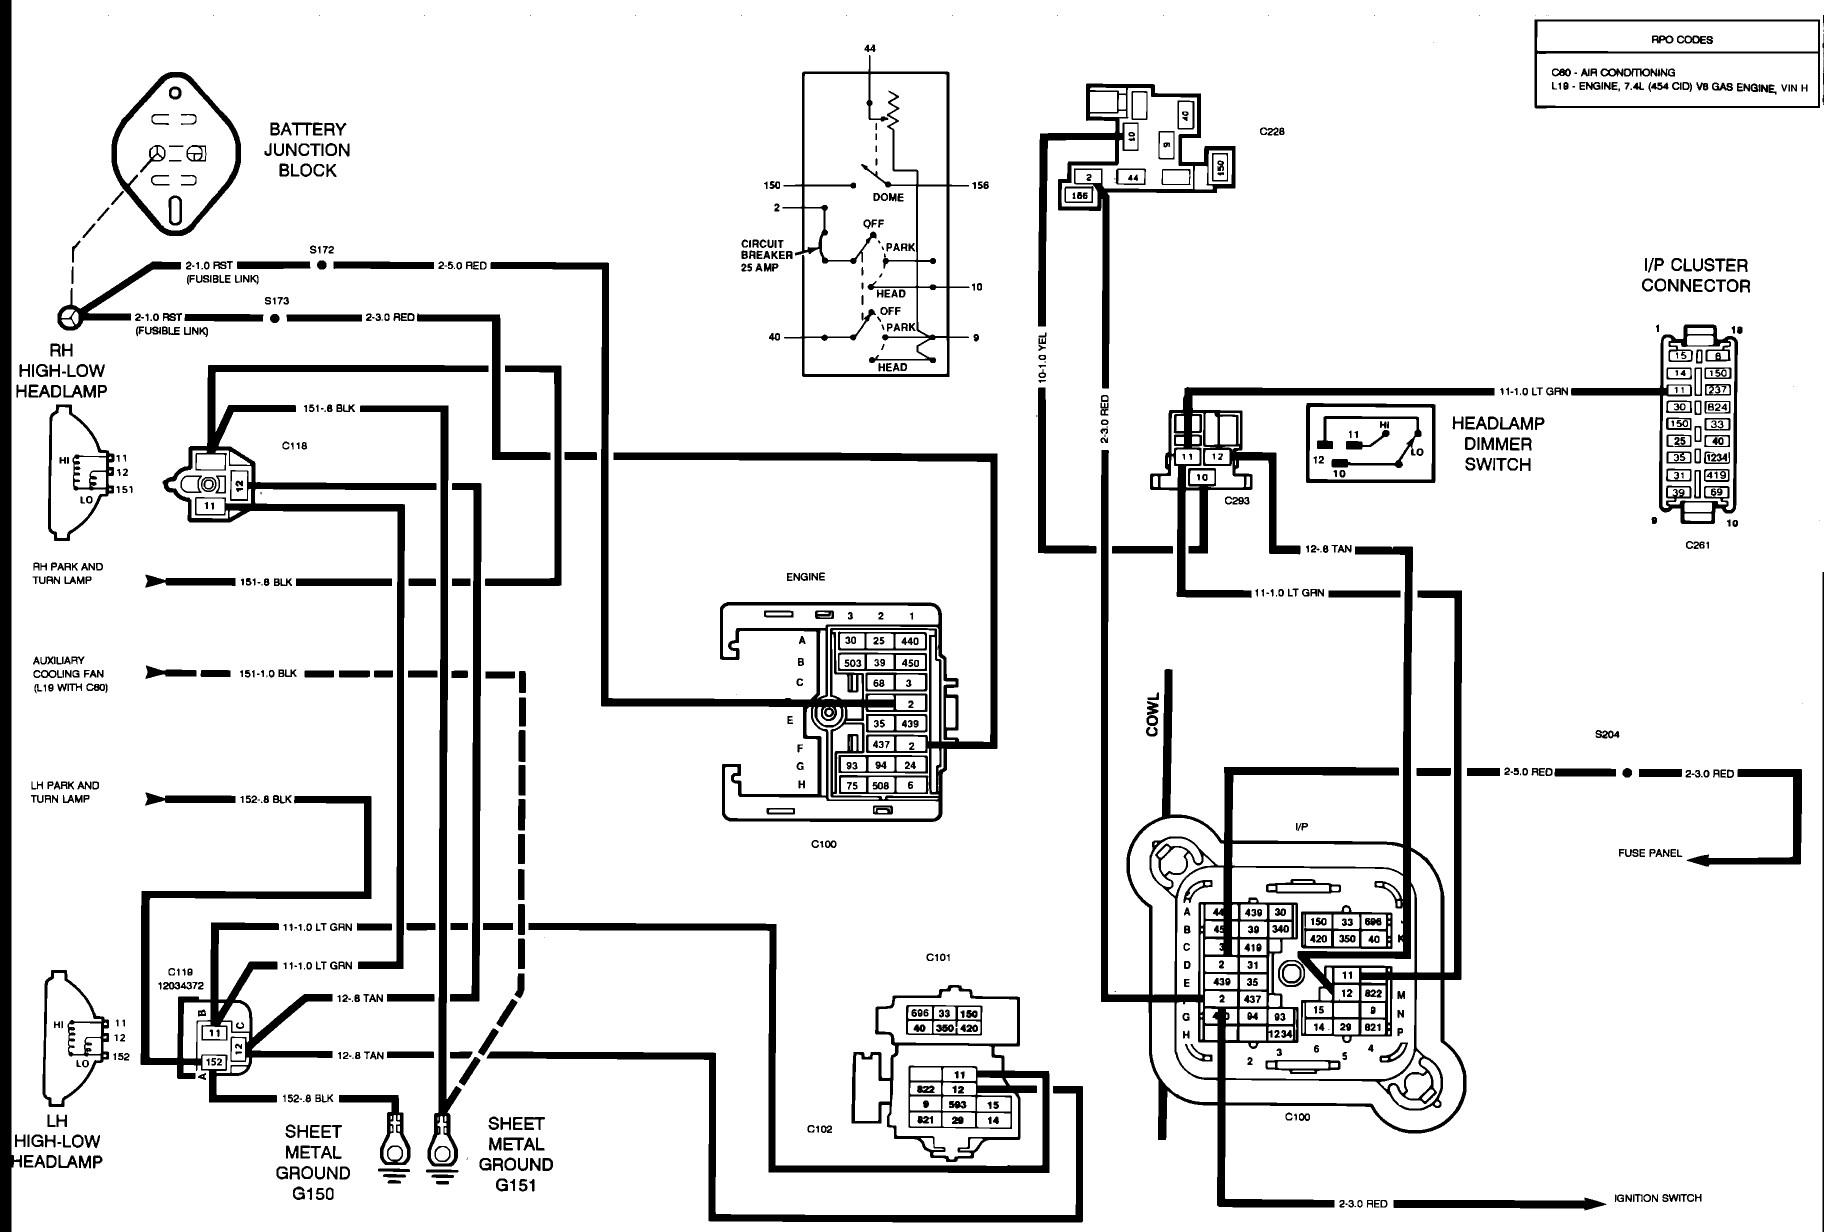 1998 Chevy Silverado Brake Light Wiring Diagram Junction Box Wiring Diagram Of 1998 Chevy Silverado Brake Light Wiring Diagram